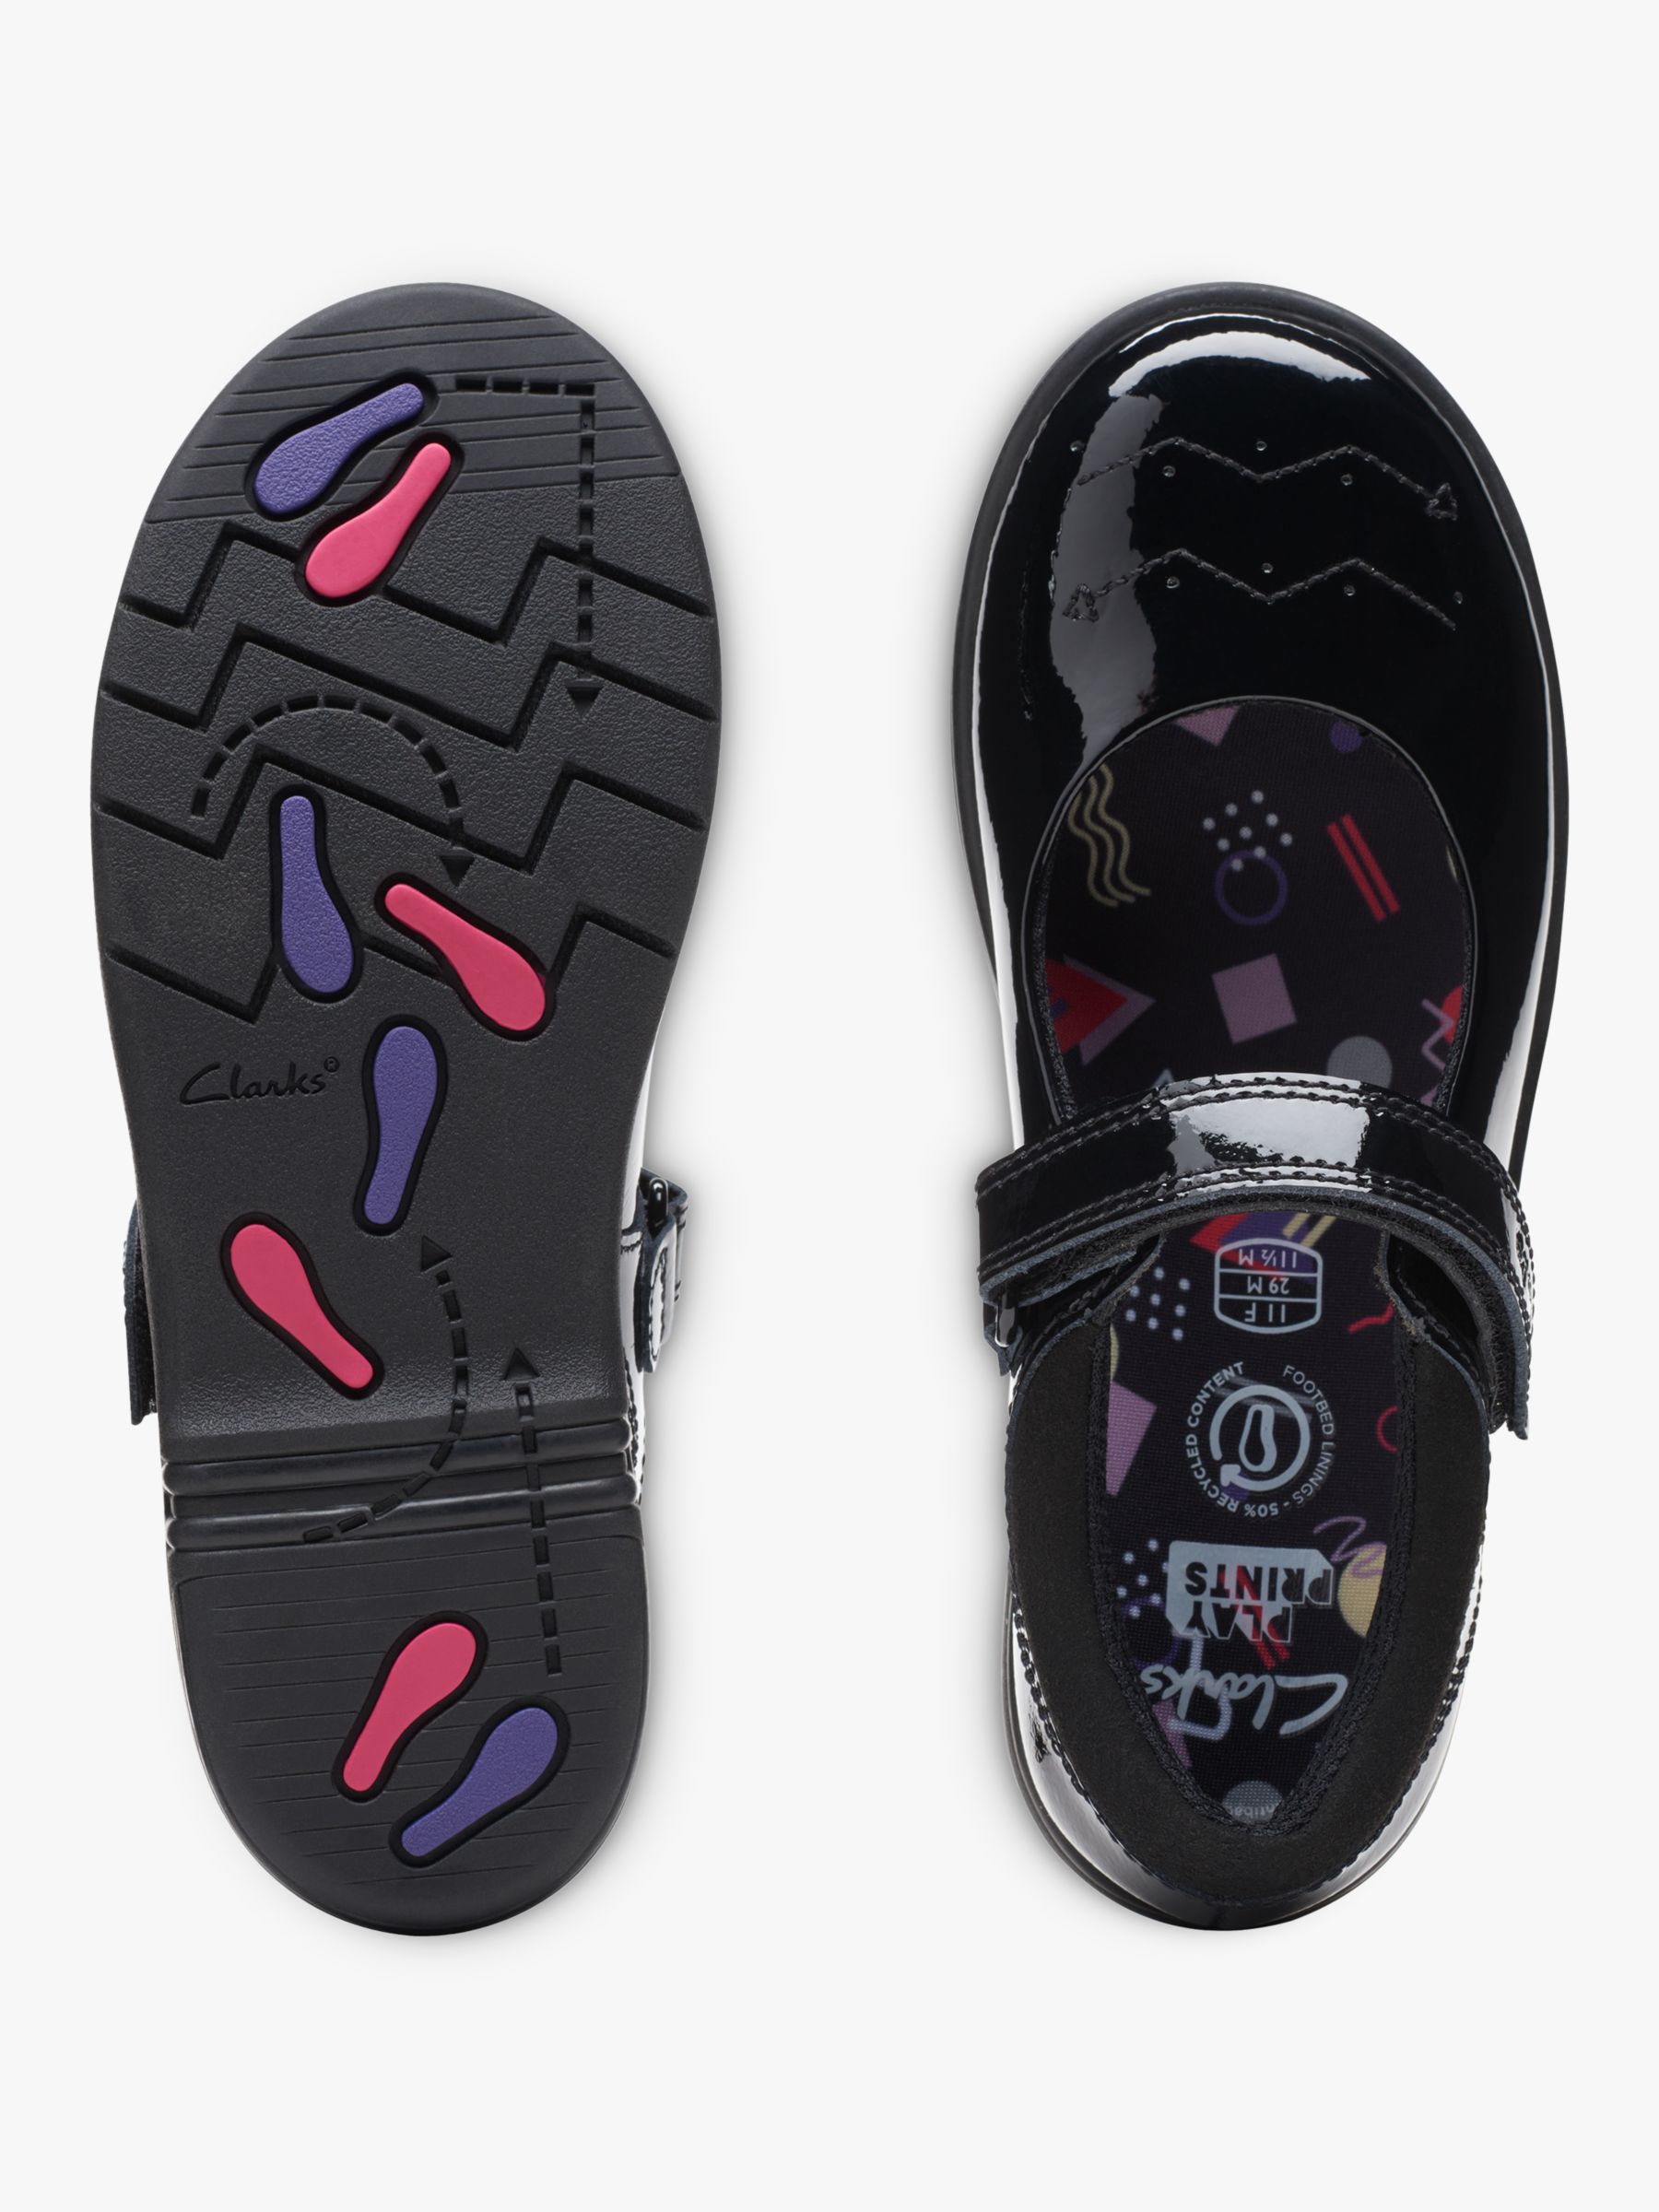 Clarks Kids' Jazzy Jig School Shoes, Black Patent, 2.5G